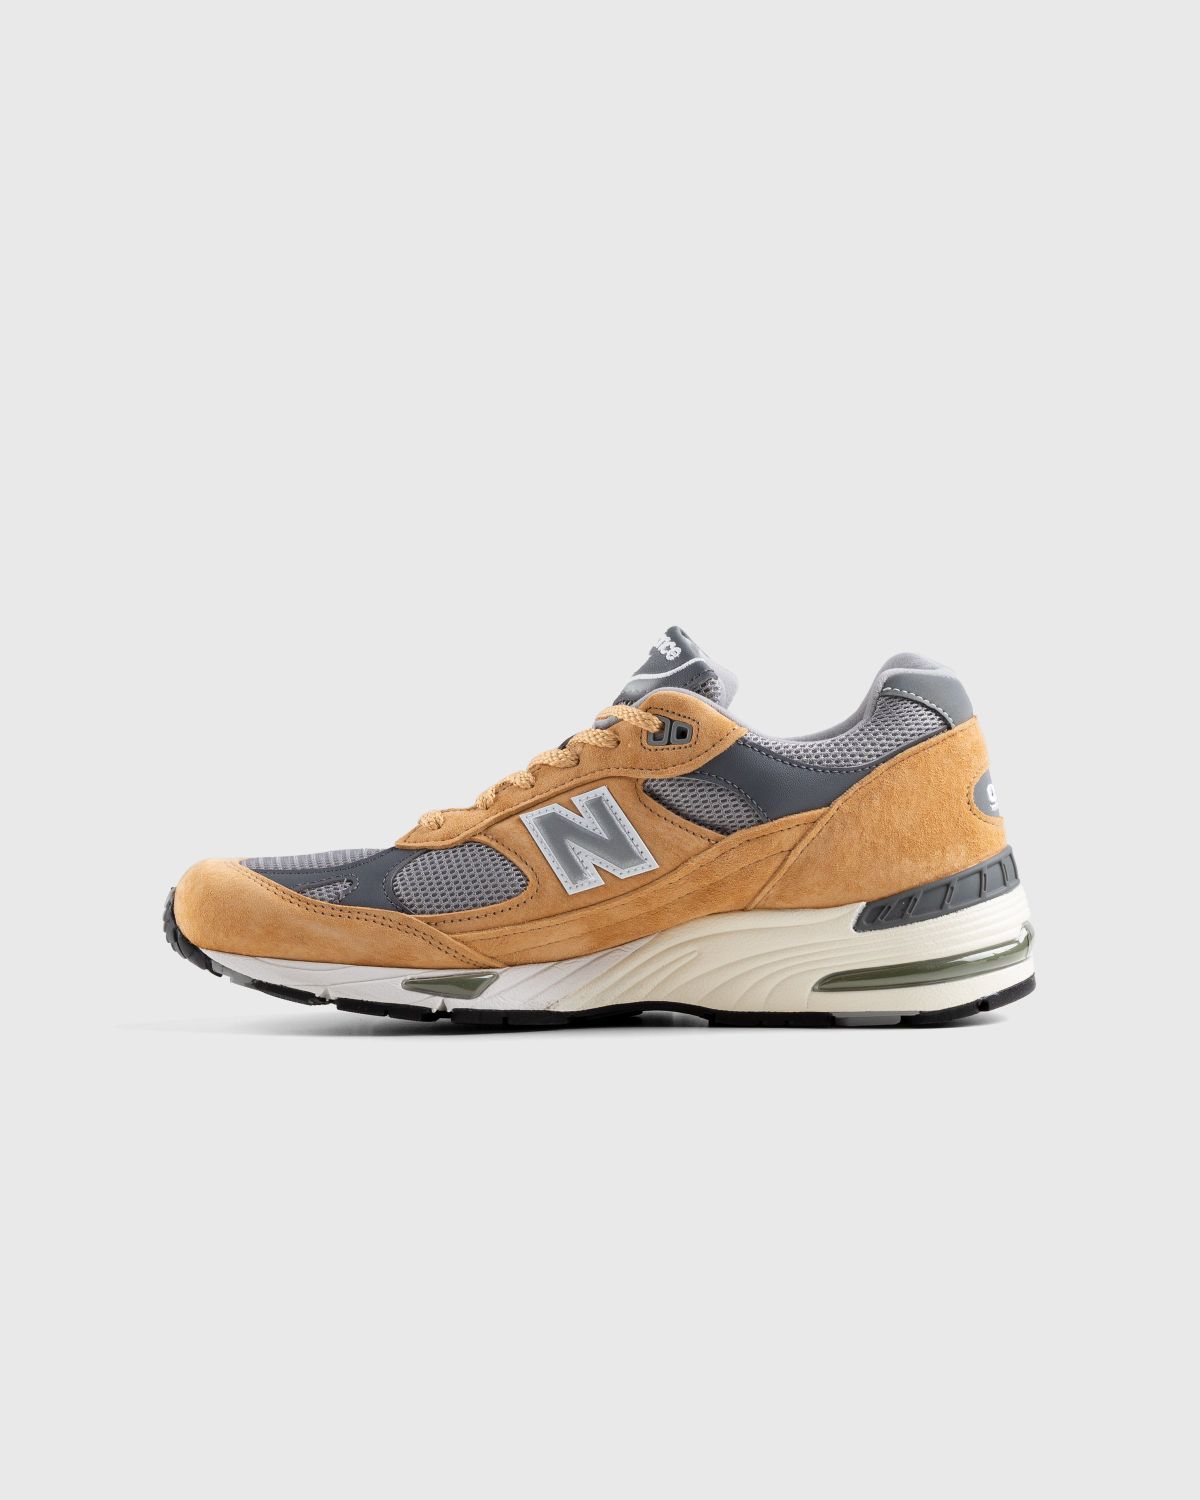 New Balance – M991TGG Tan/Grey - Sneakers - Brown - Image 2